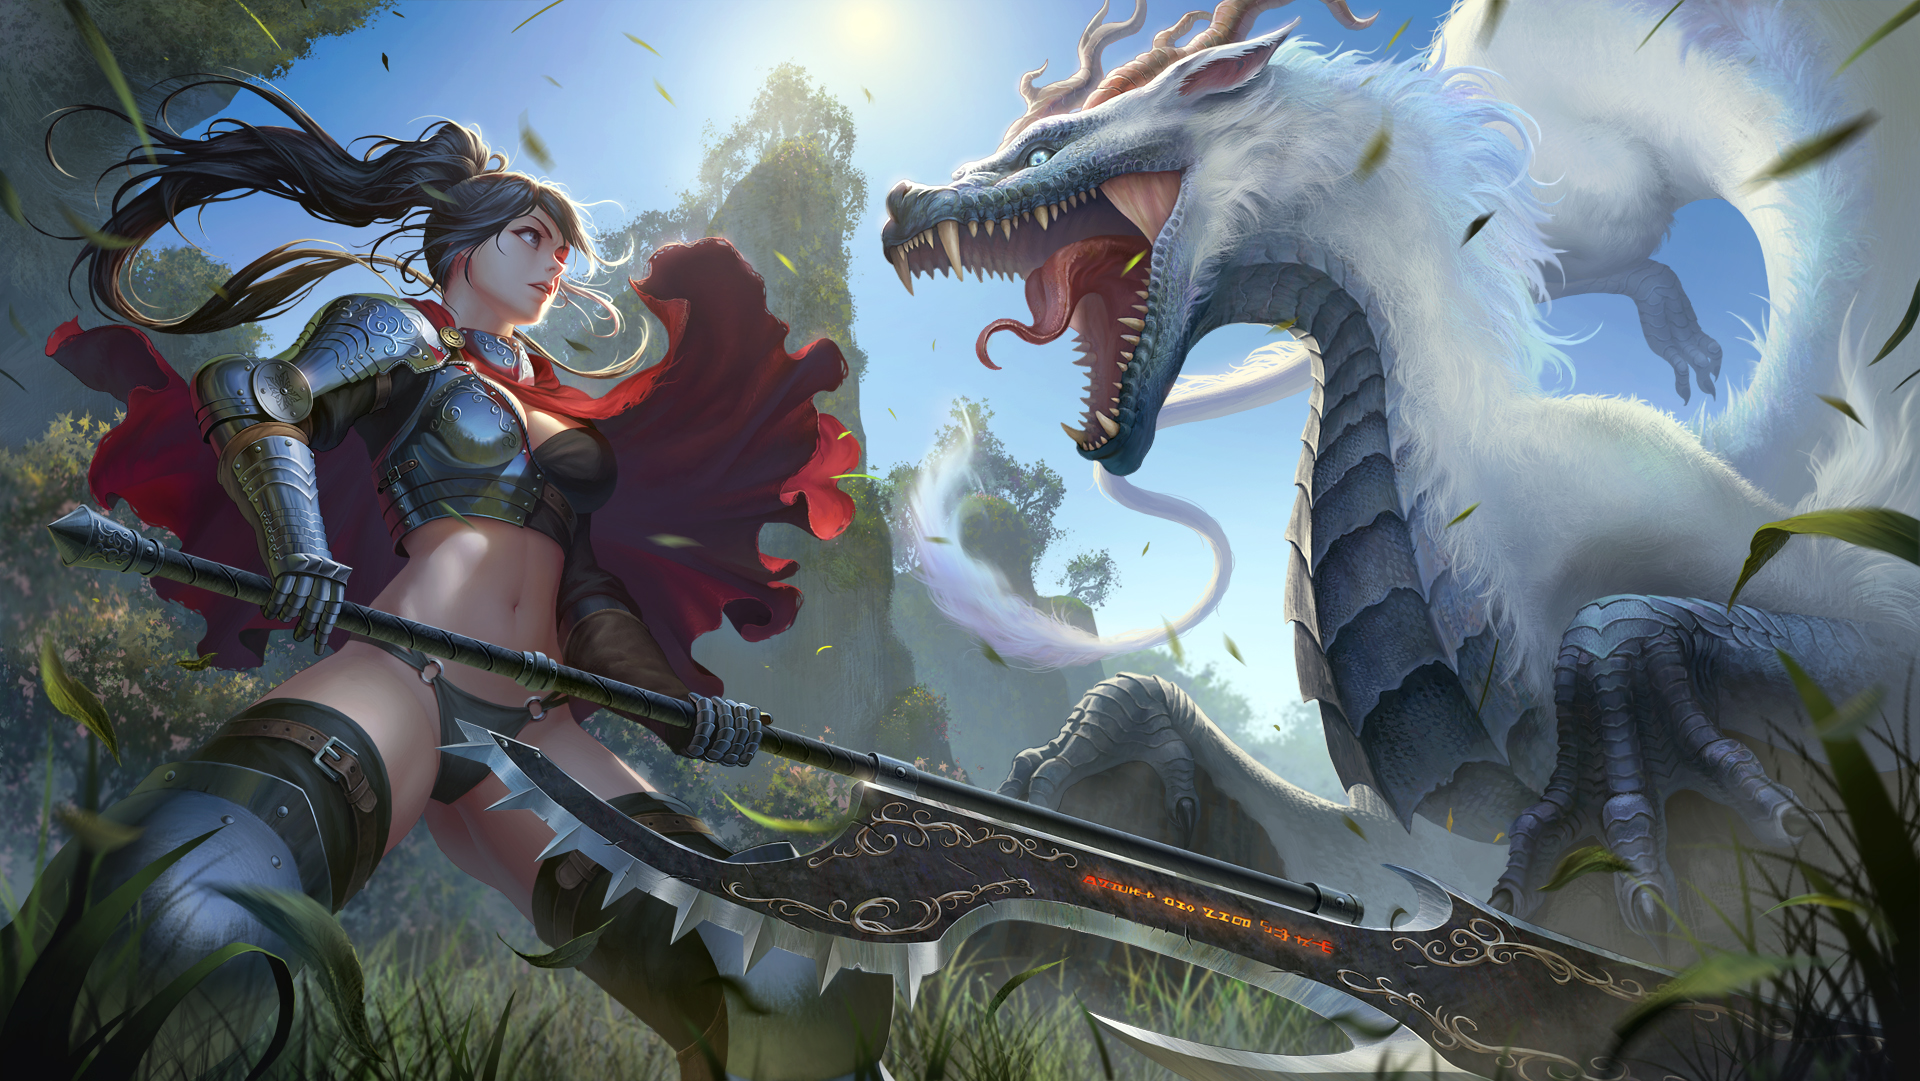 ArtStation - Dragon slayer girl